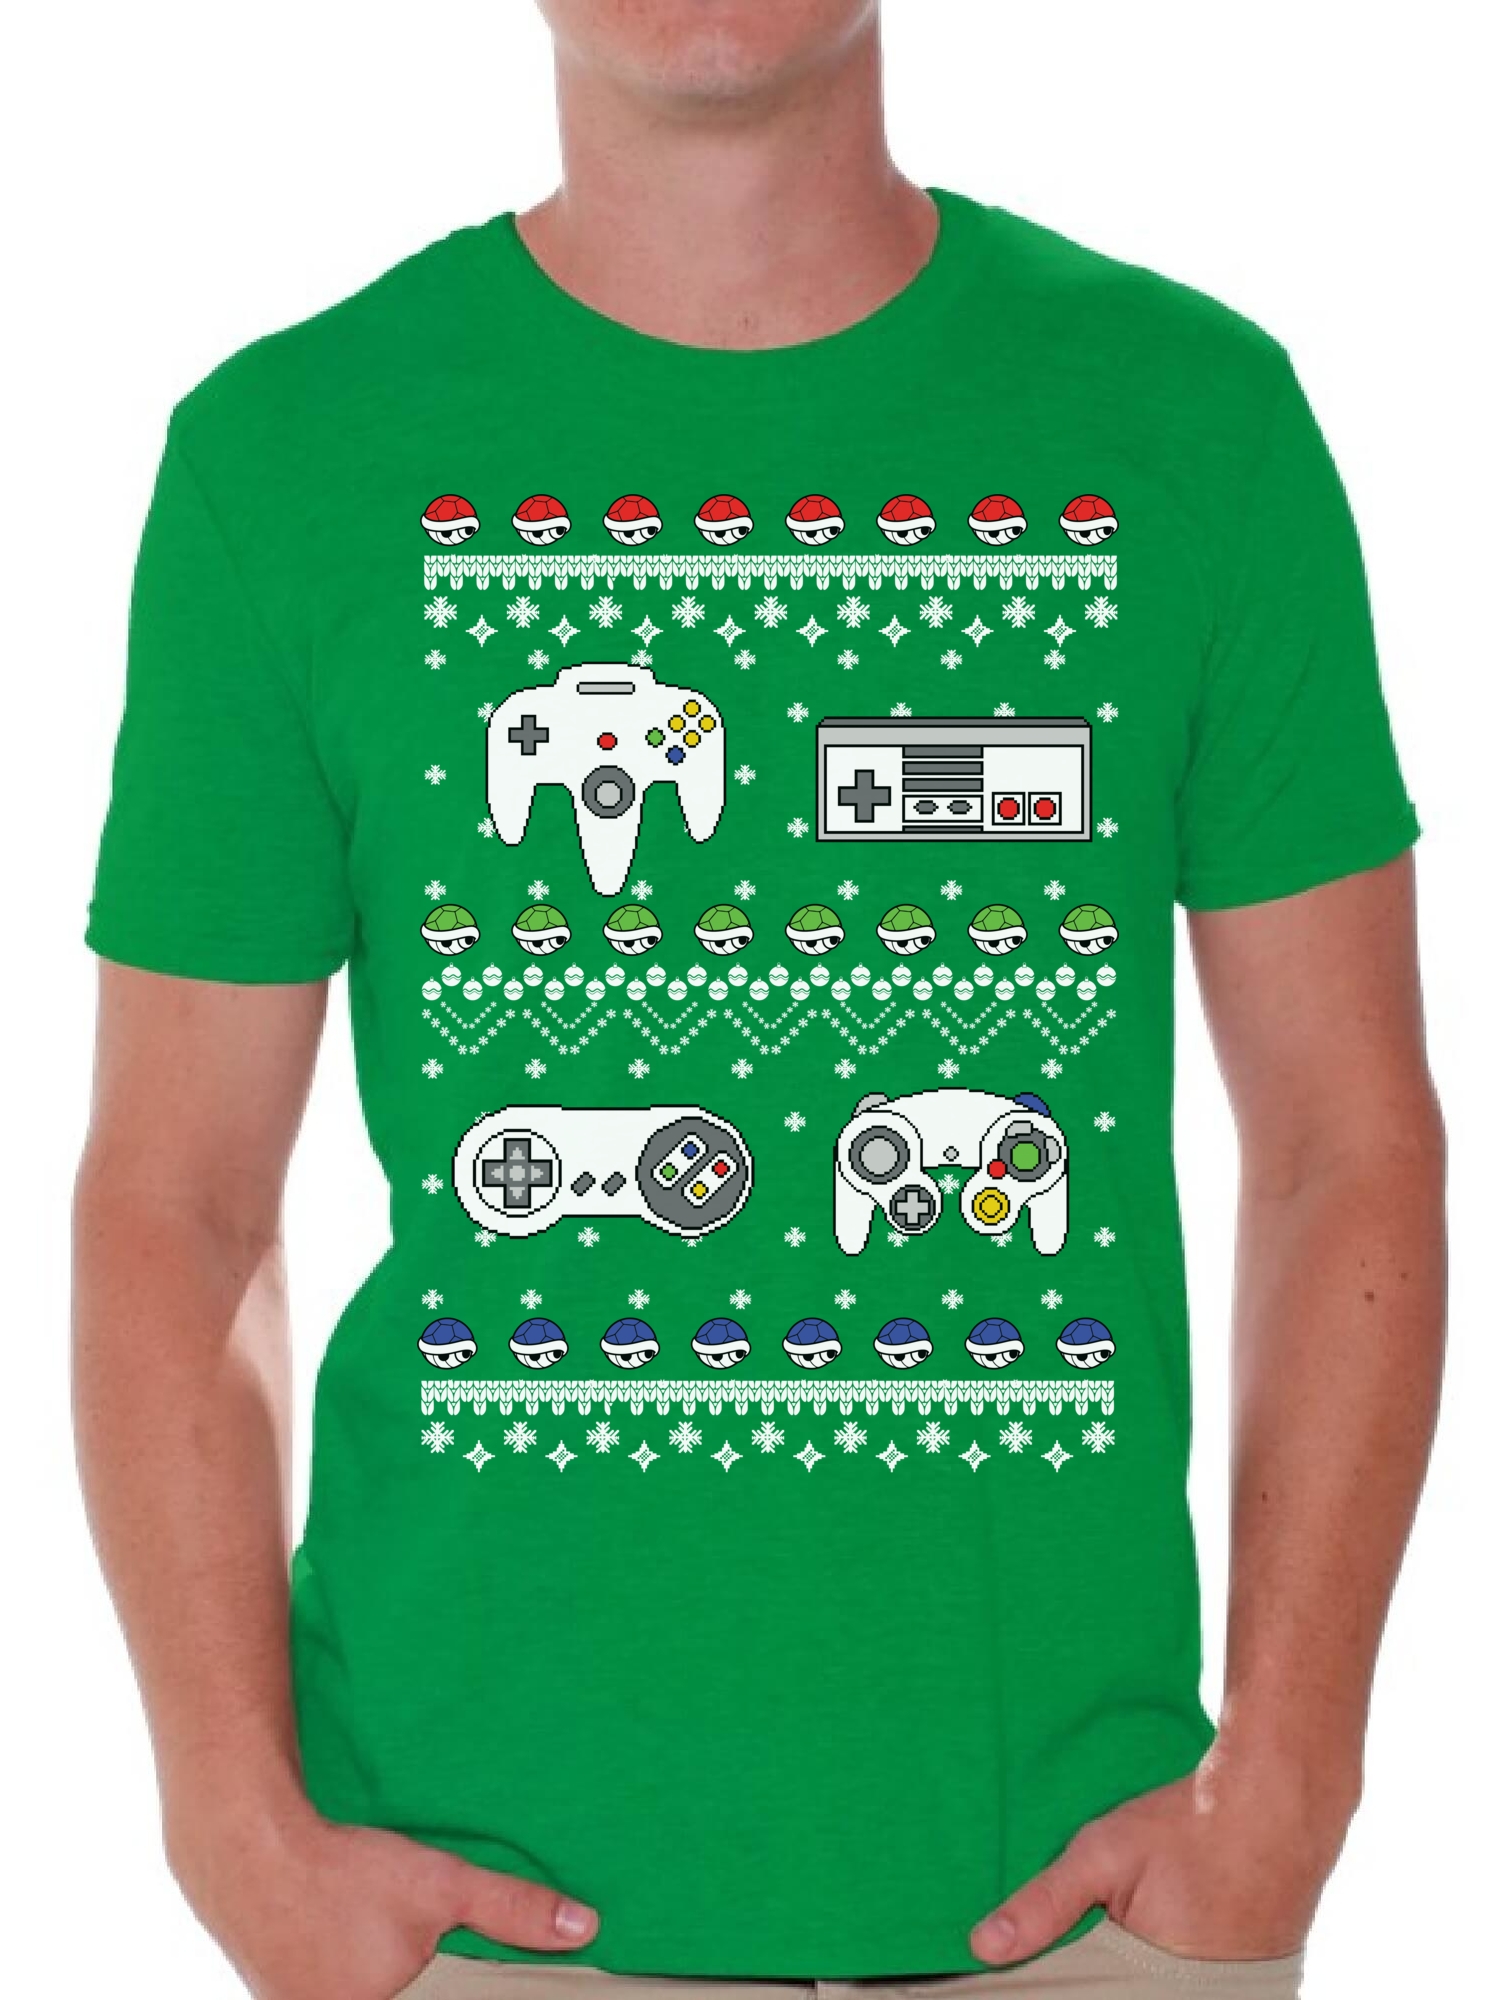 Awkward Styles Gamer Christmas Tshirt for Men Retro Gamer Shirt Funny Christmas Shirts for Men Ugly Christmas T Shirt Geeky Christmas T-Shirt Xmas Party Gifts for Him Nerdy Xmas Tshirt Xmas Gaming - image 1 of 4